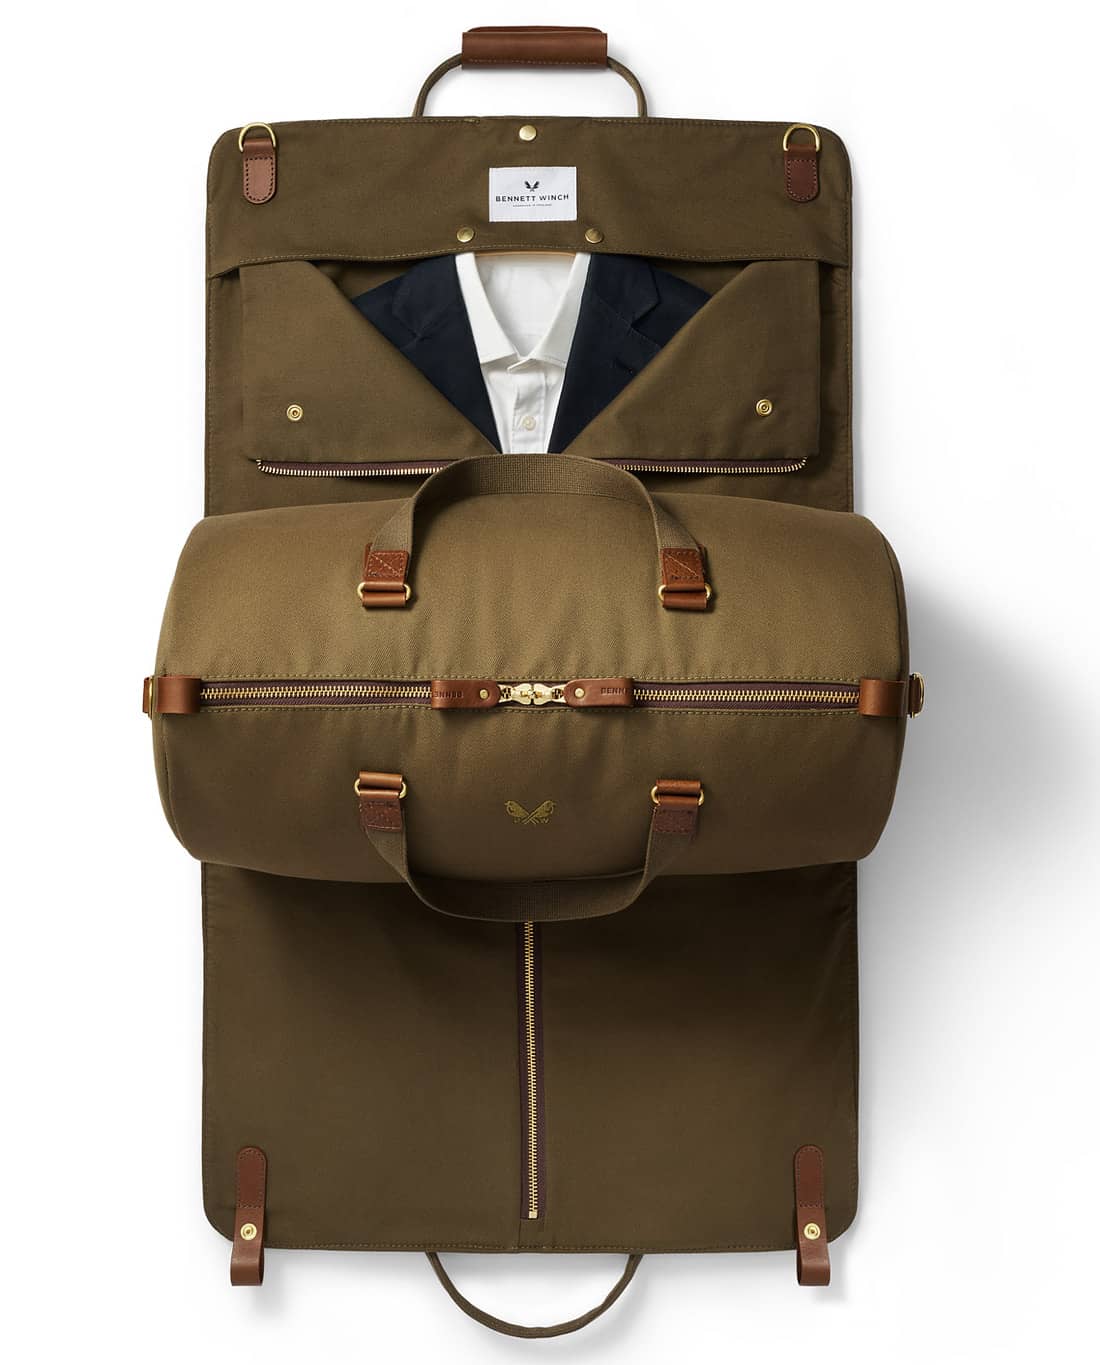 Luxury Leather Suit Carrier Bag Brown Suiter Case Dress Garment Cover Travel Bag 